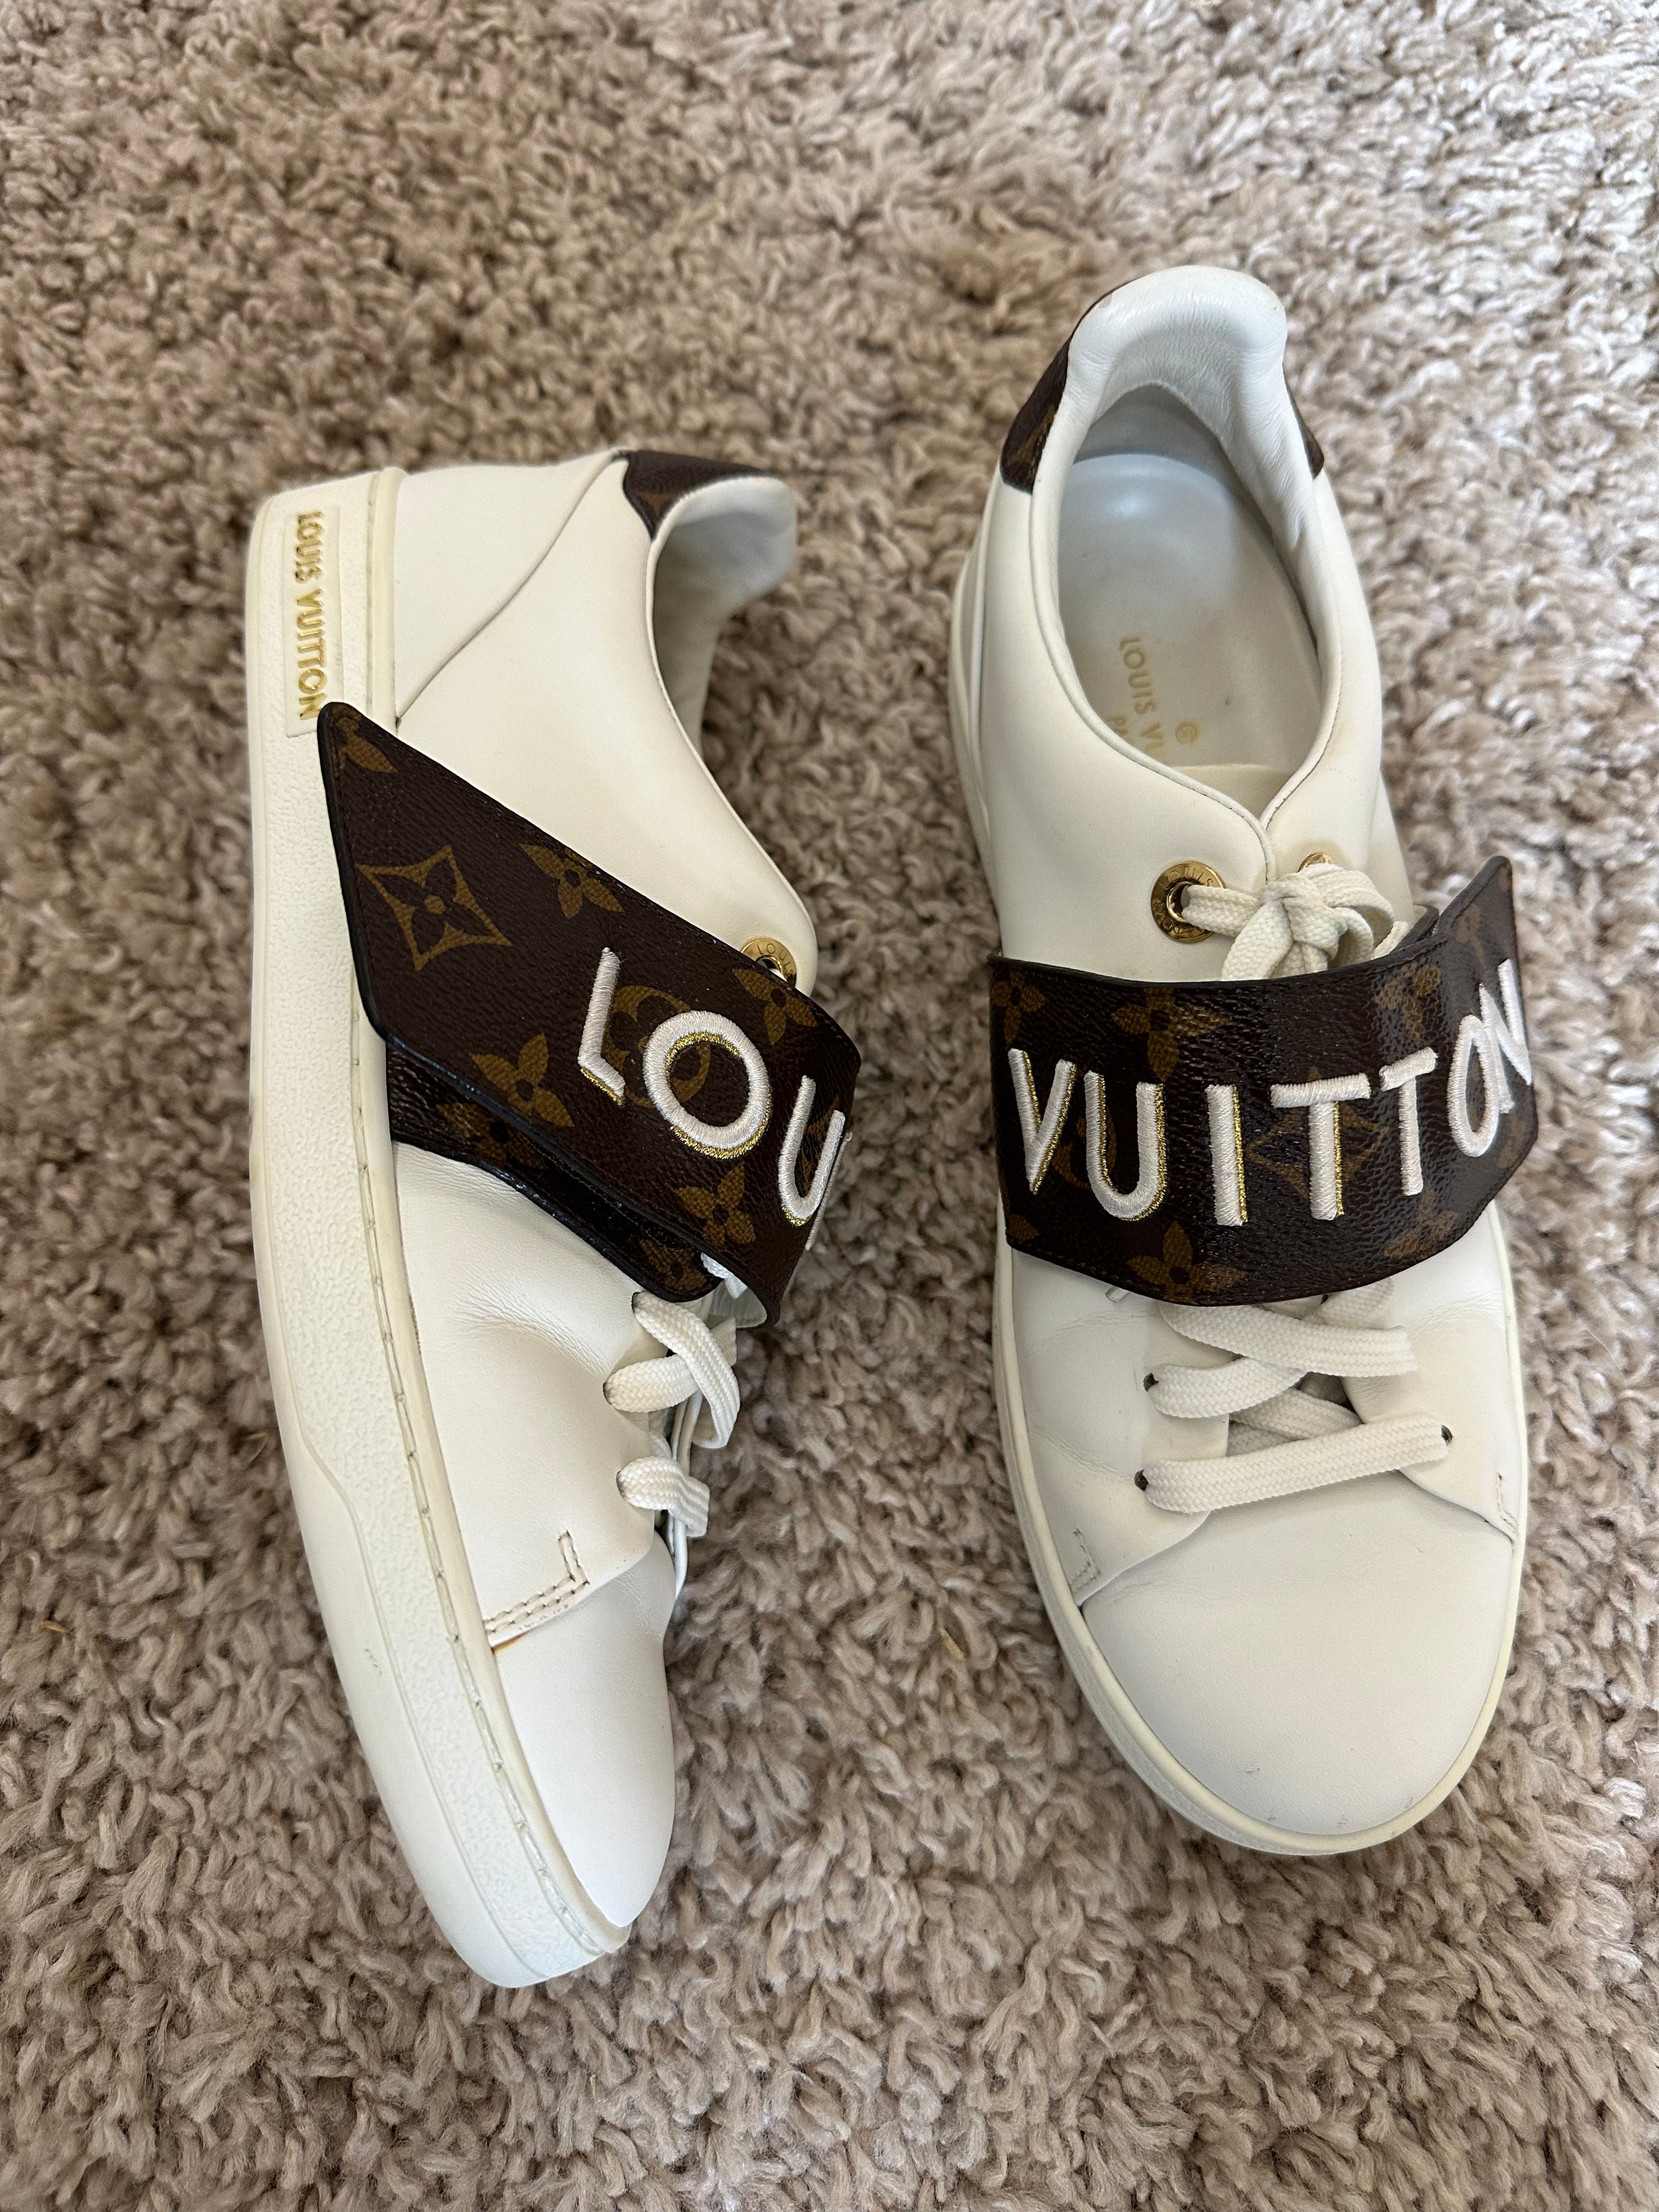 Louis Vuitton Sneakers (EU38)